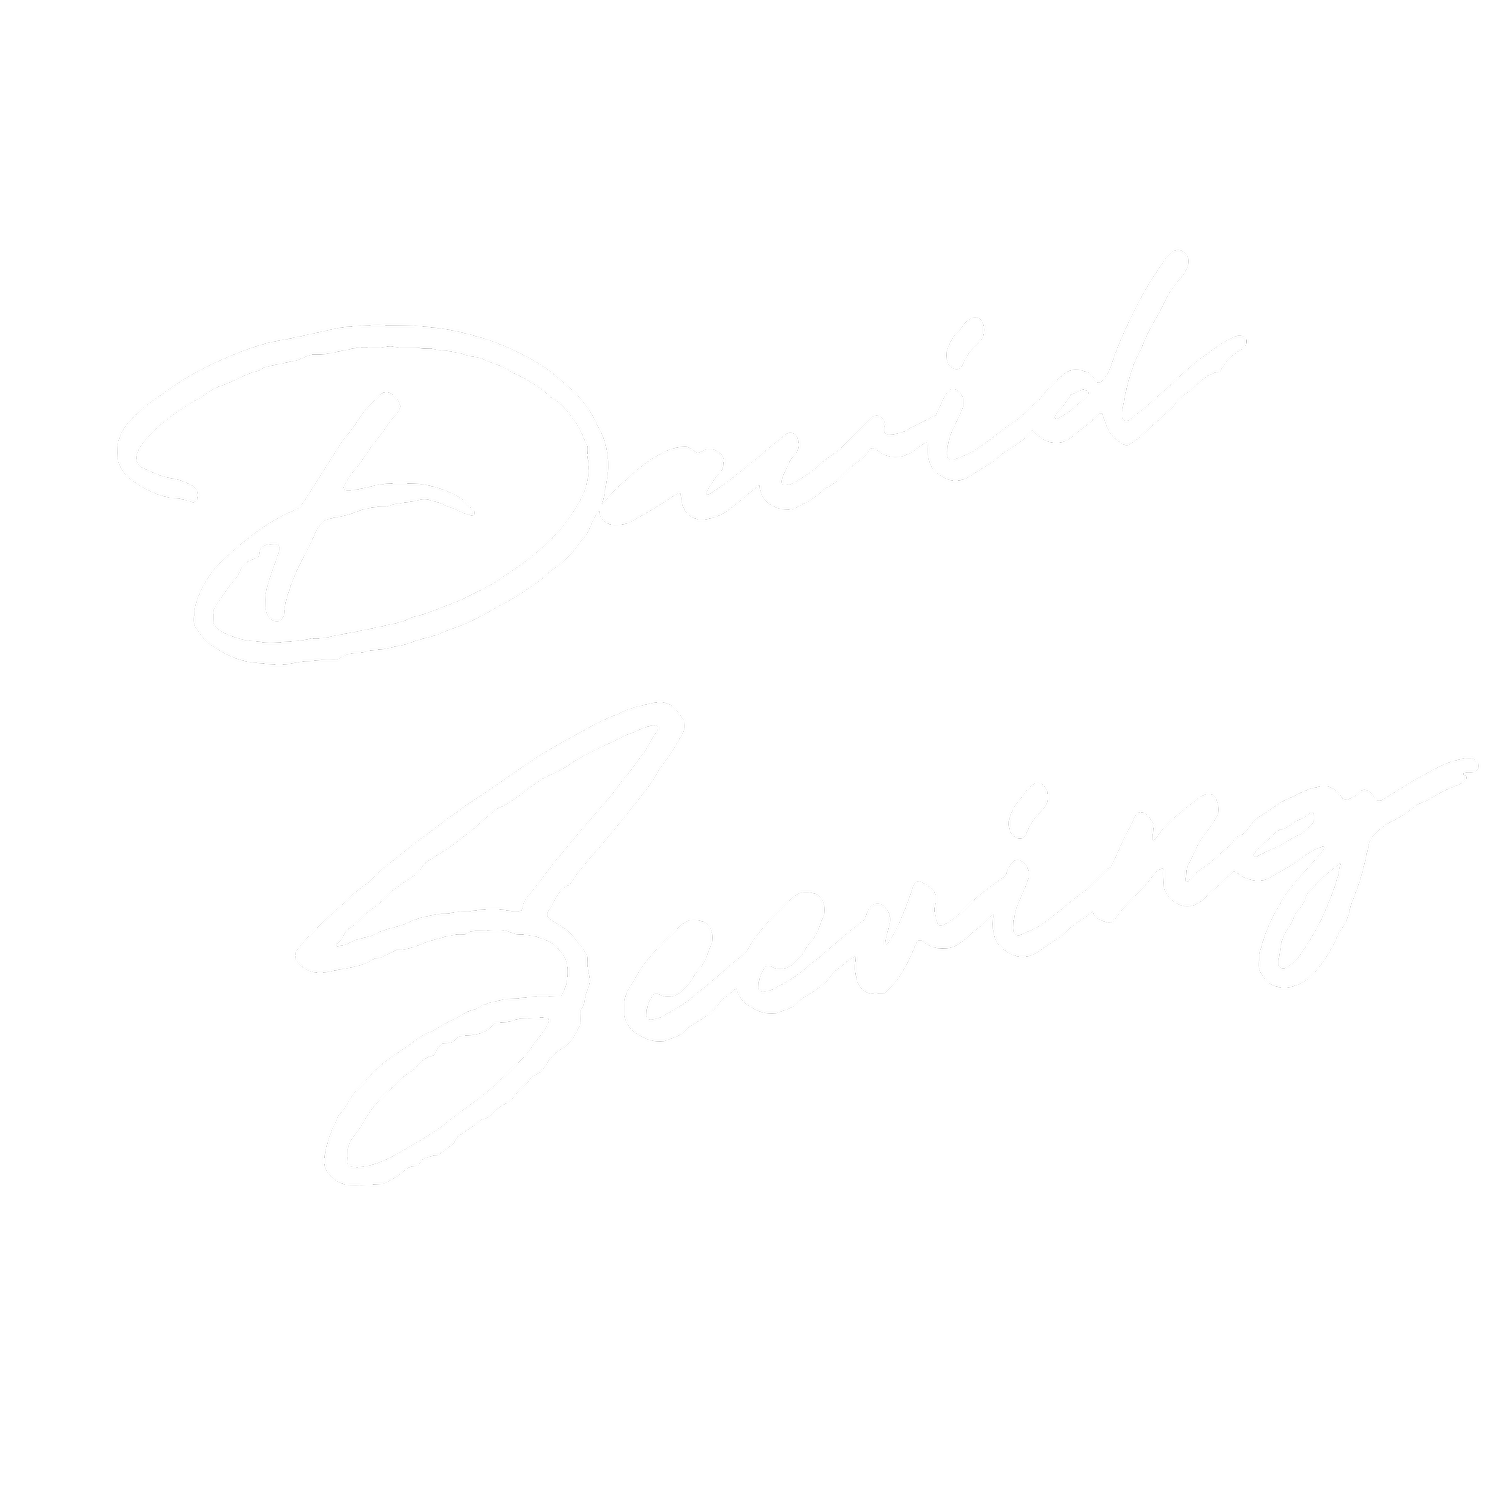 David Seering